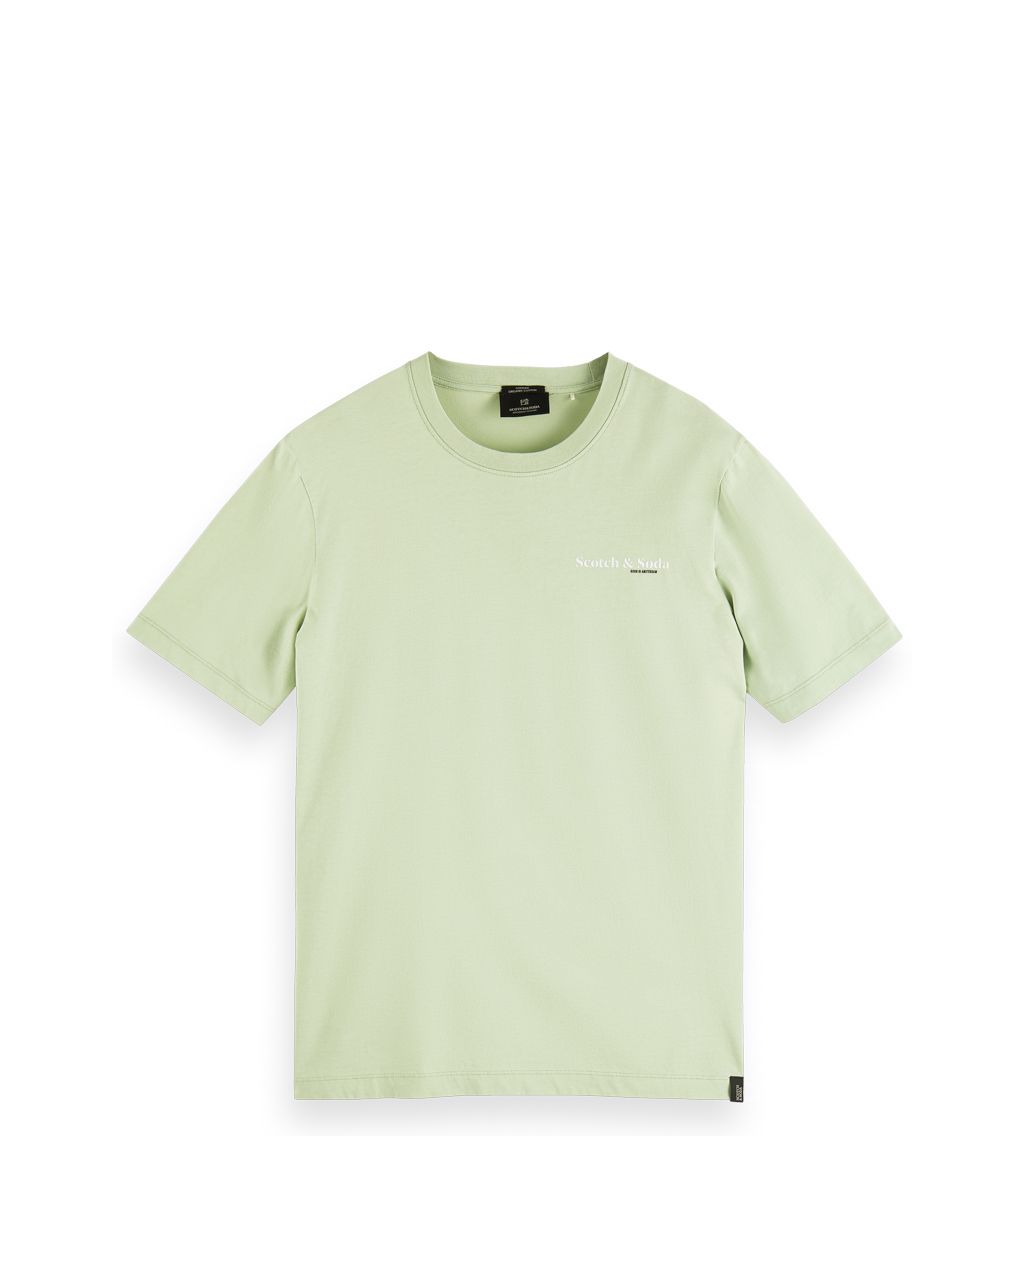 Scotch & Soda T-shirt KM Groen 069901-001-L